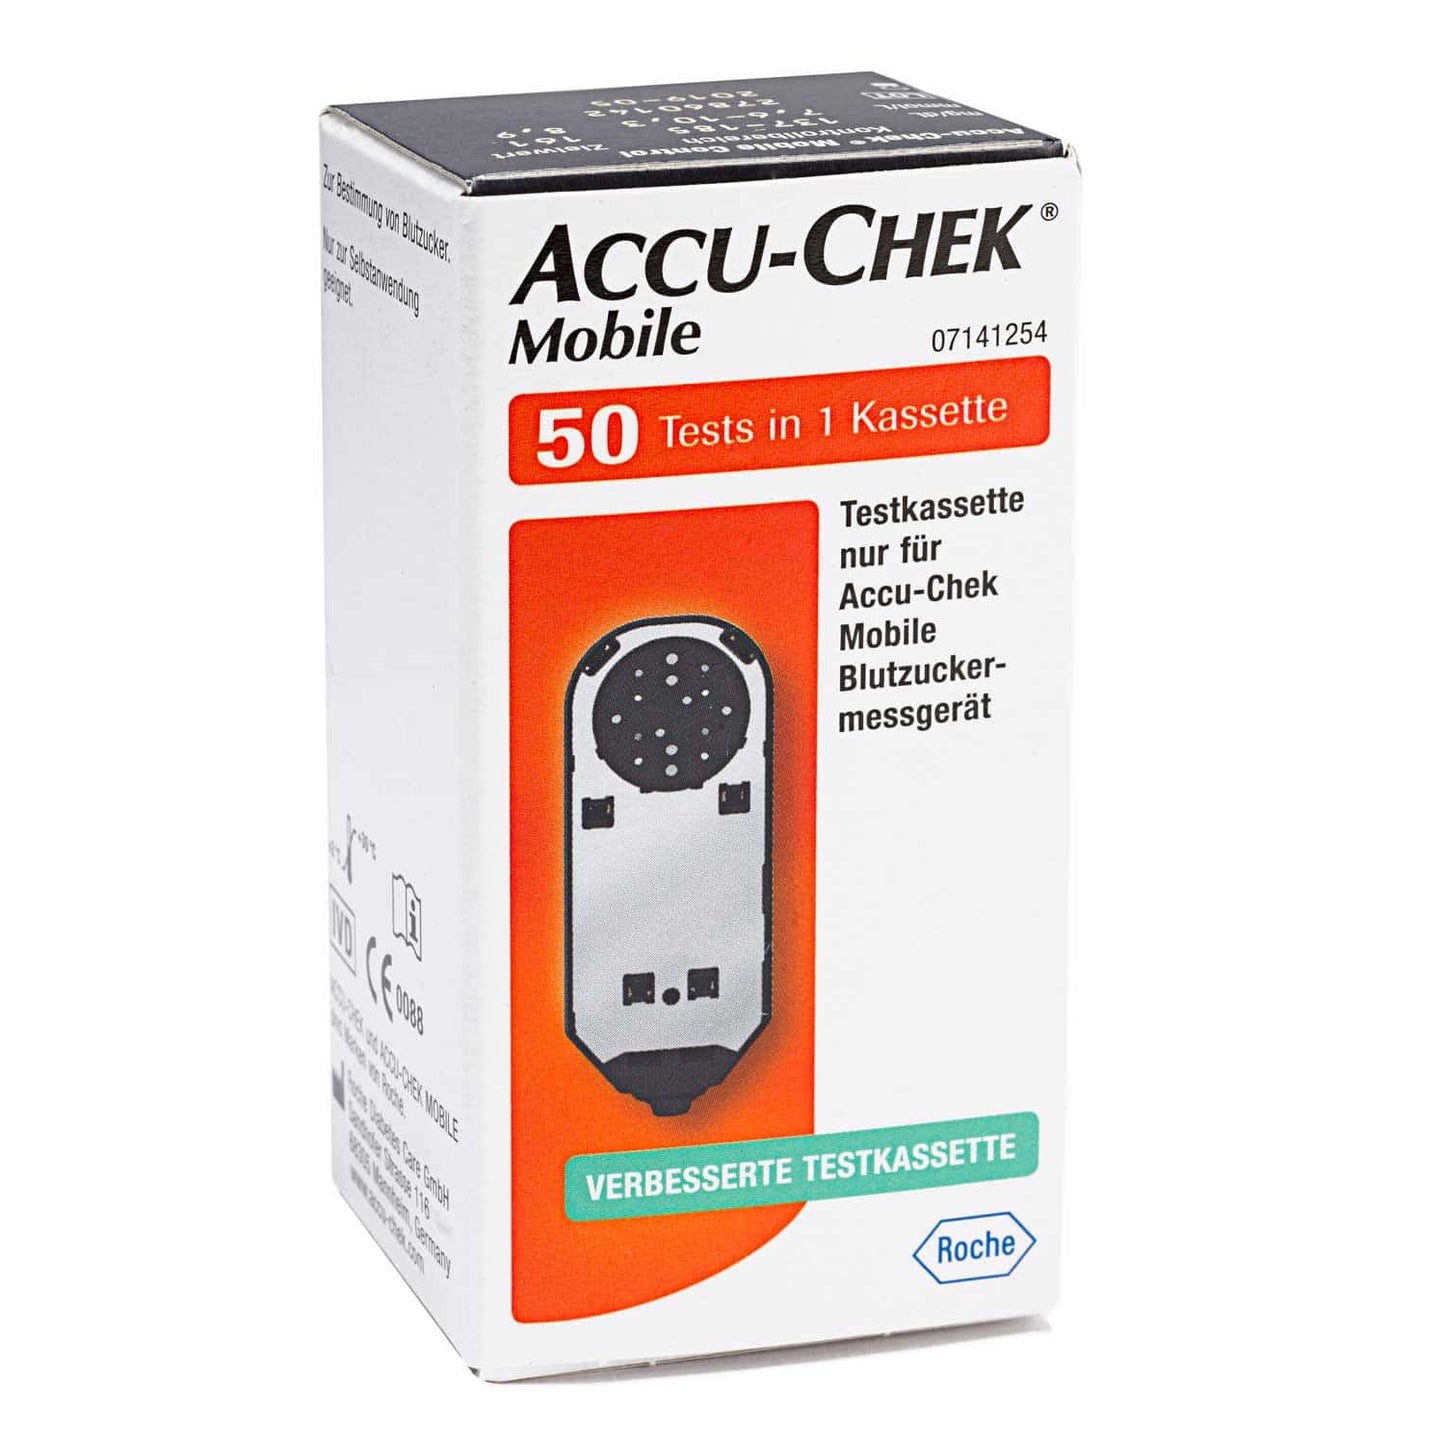 Accu-Chek Mobile Test Cassette For 50 Measurements